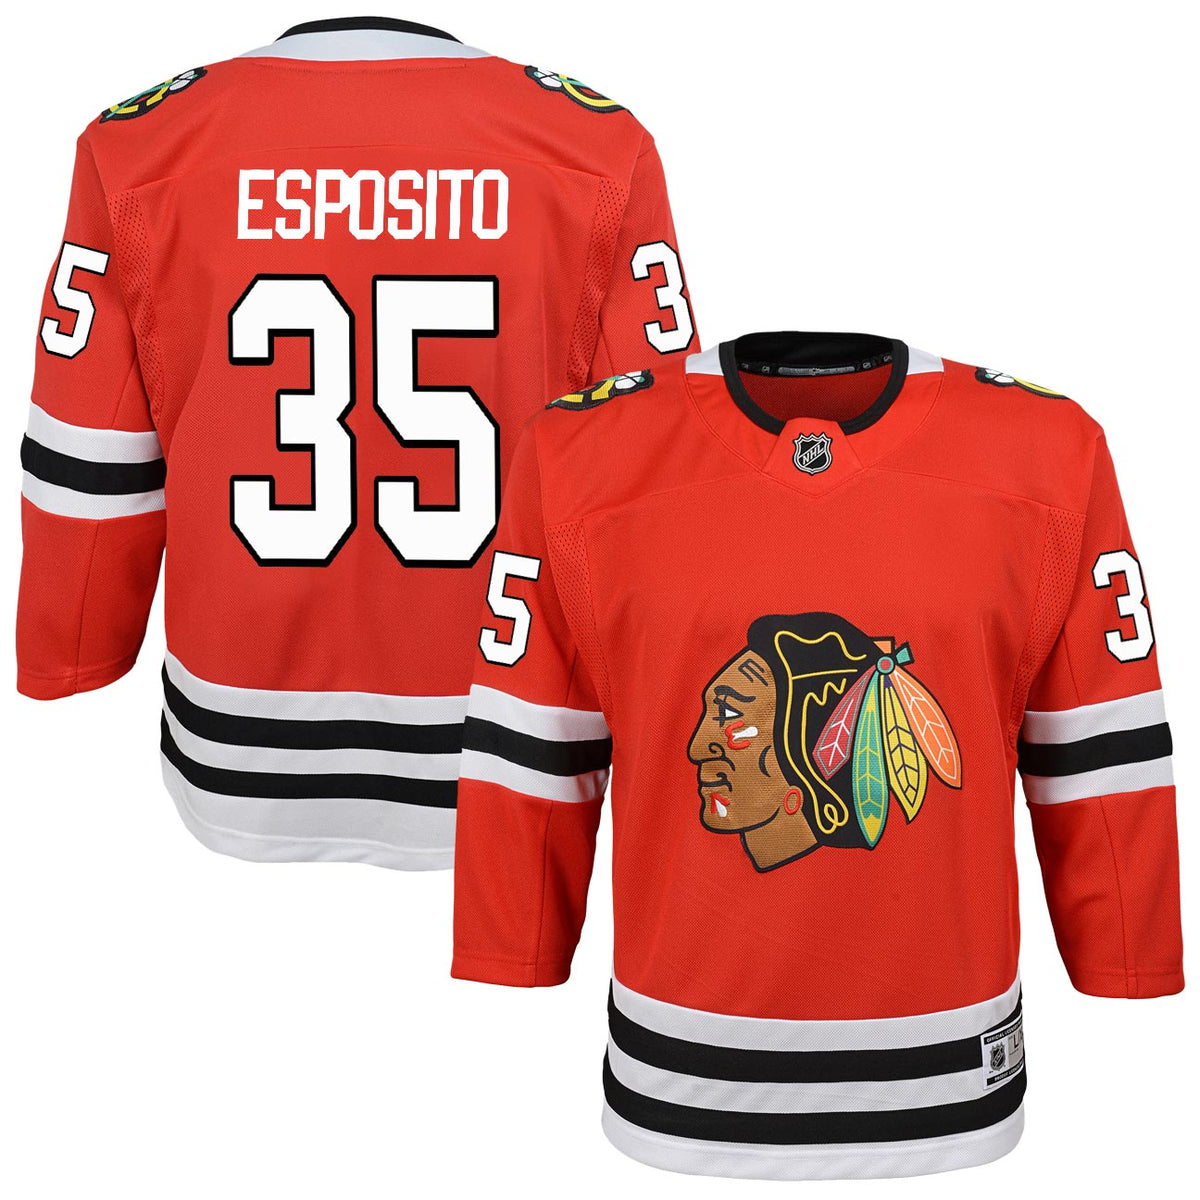 Tony Esposito Patch 35 Chicago Blackhawks Hockey Jersey -  Norway